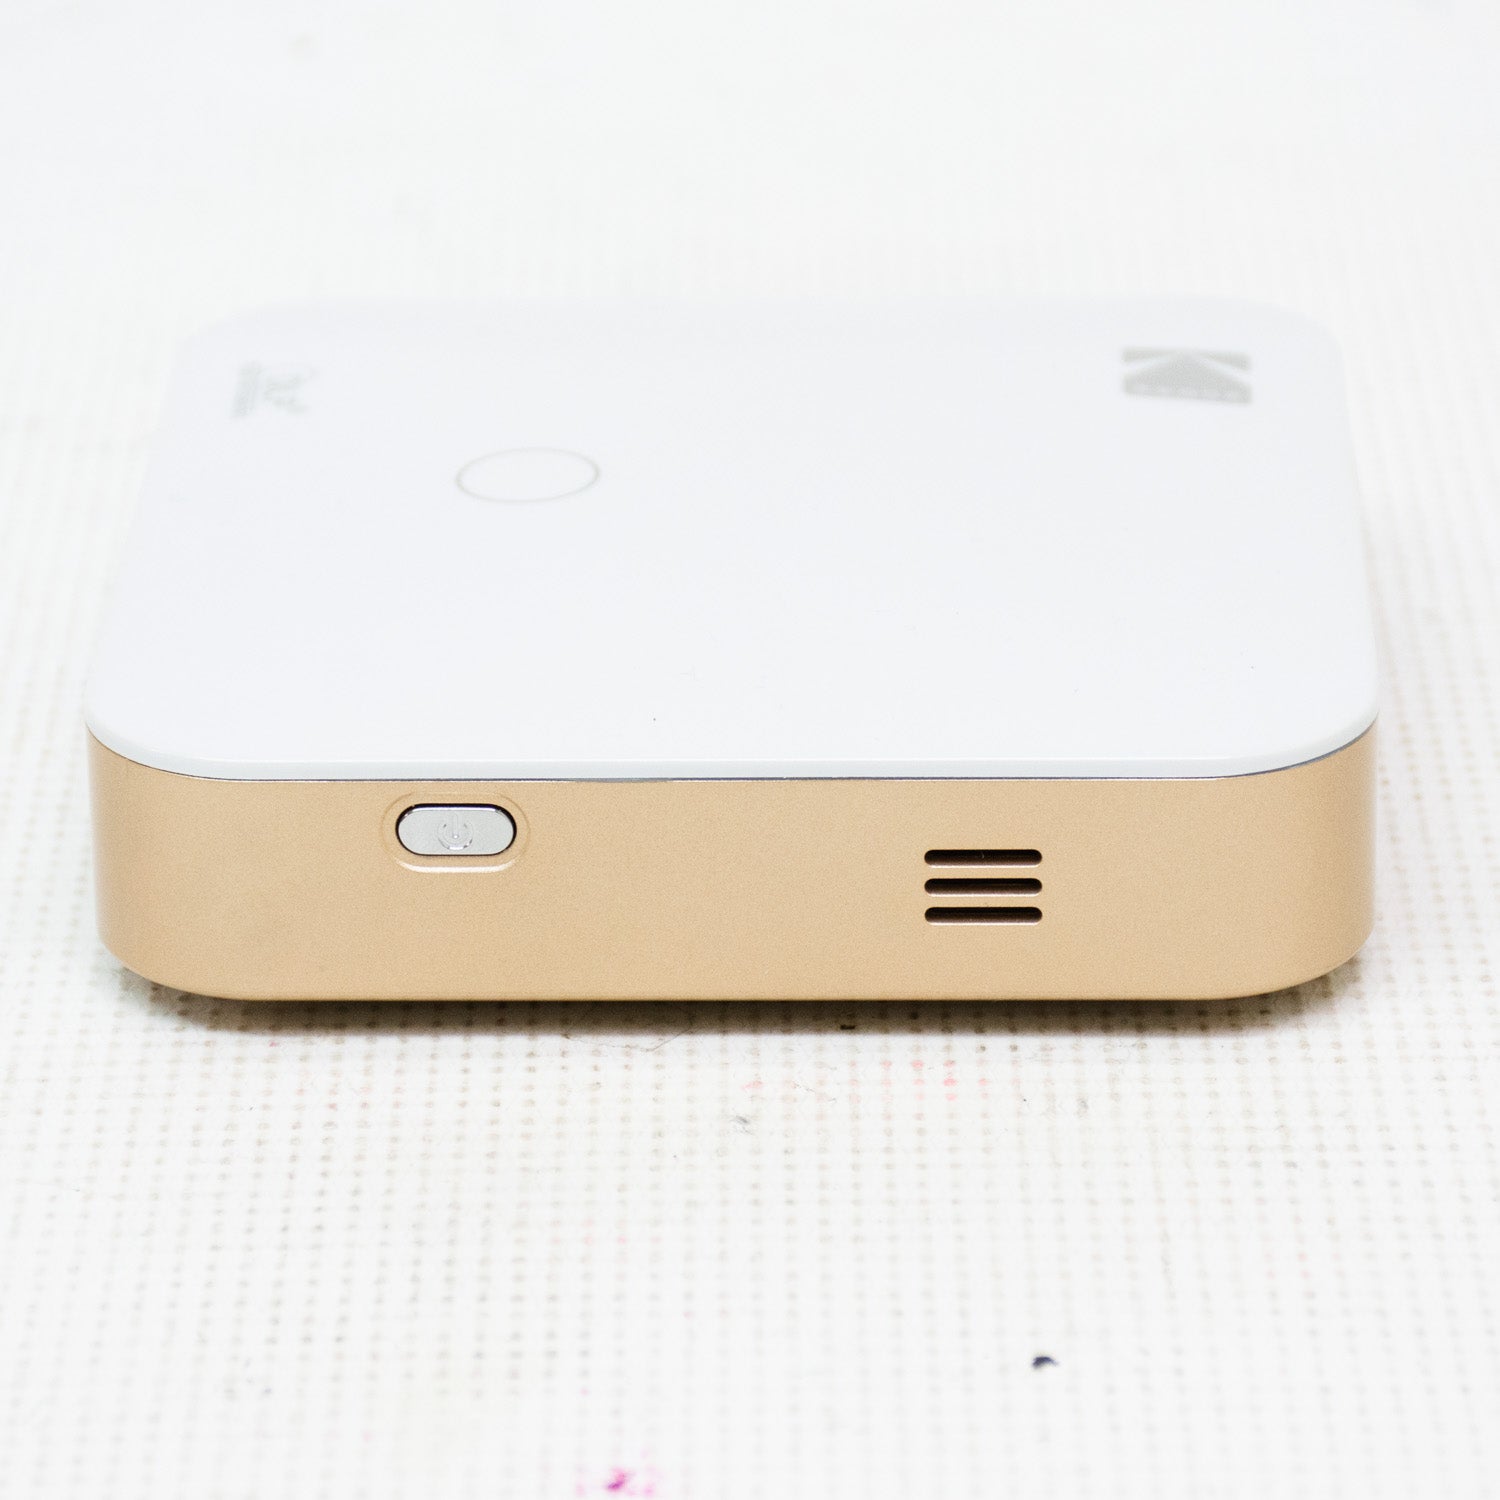 Kodak Luma 350 Portable Smart Projector - White/Gold